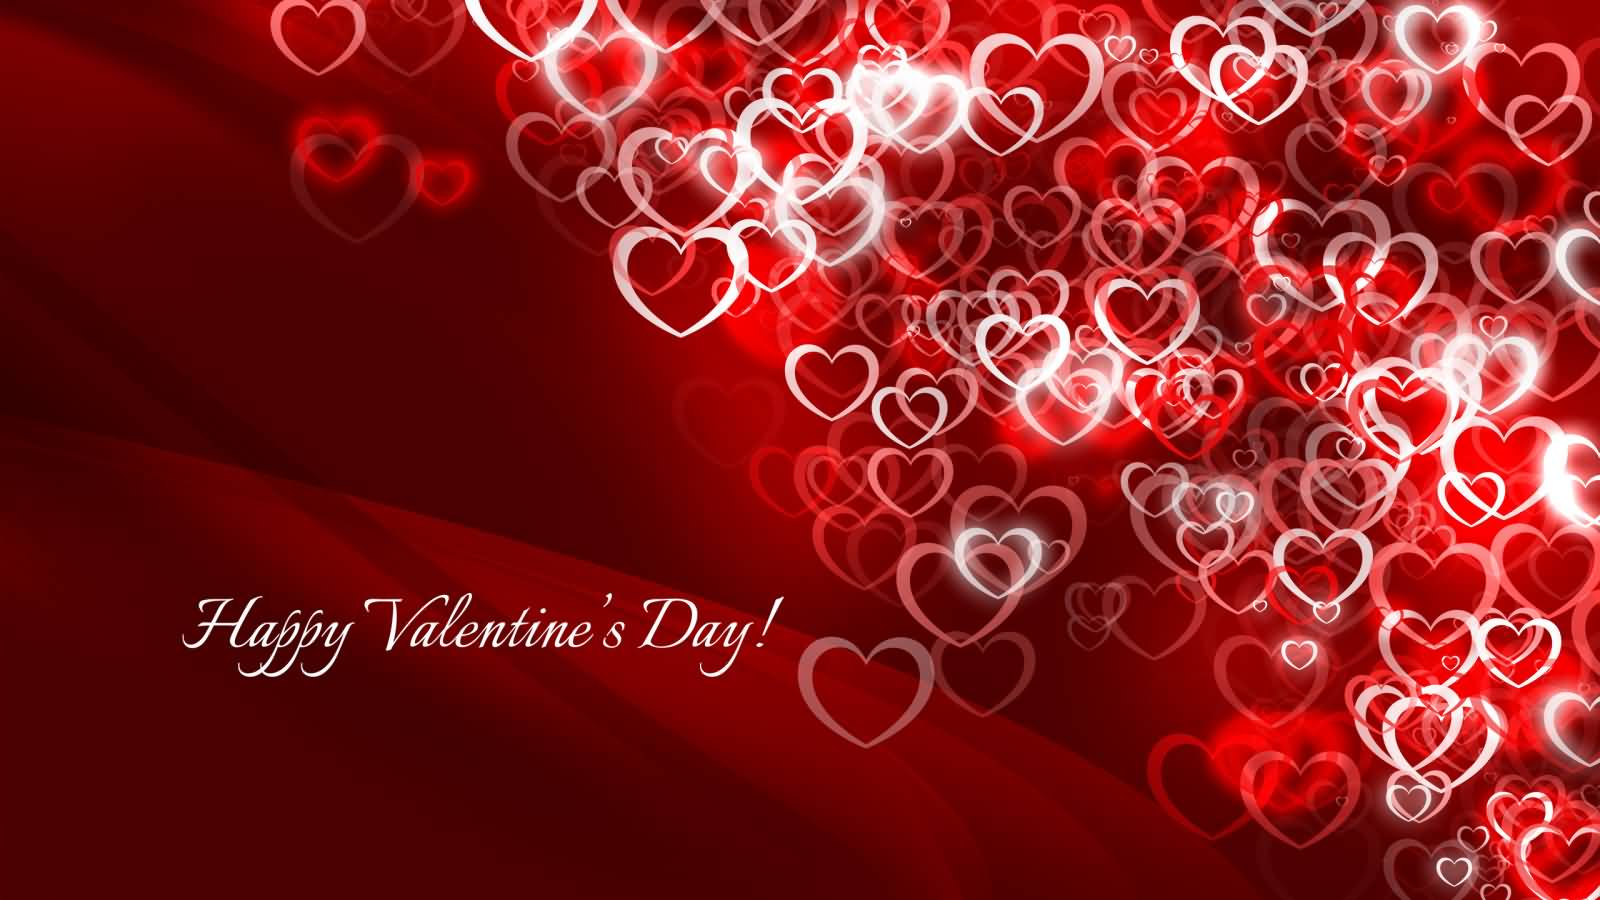 Happy Valentine’s Day Hearts HD Wallpaper For Desktop